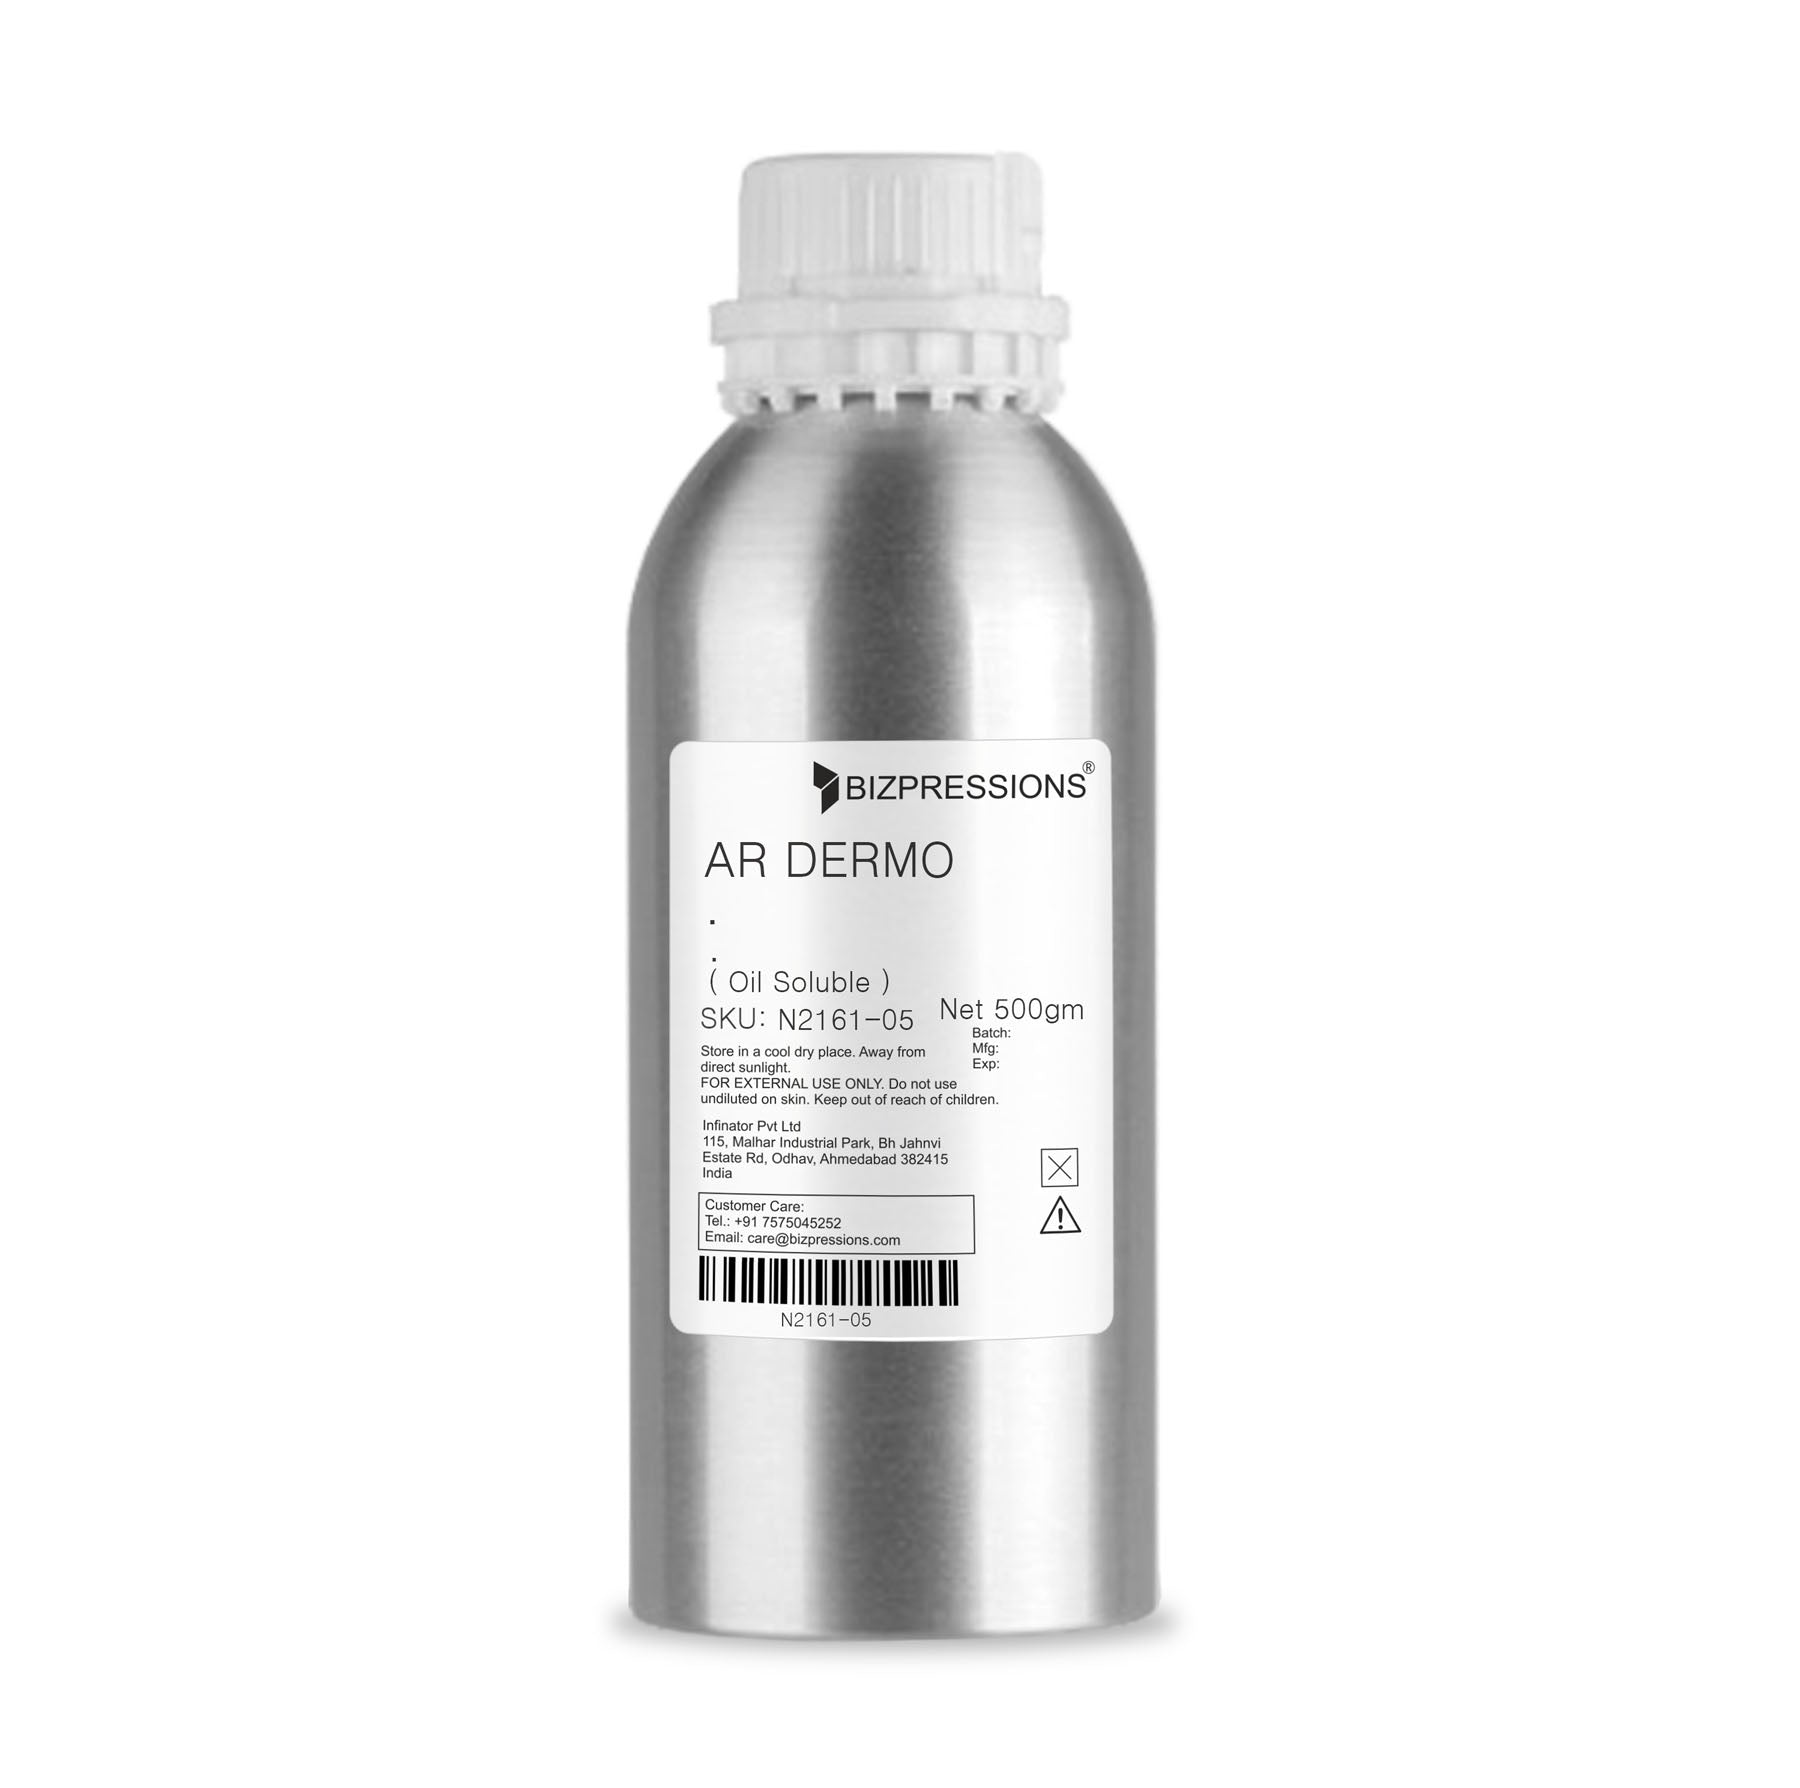 AR DERMO - Fragrance ( Oil Soluble ) - 500 gm